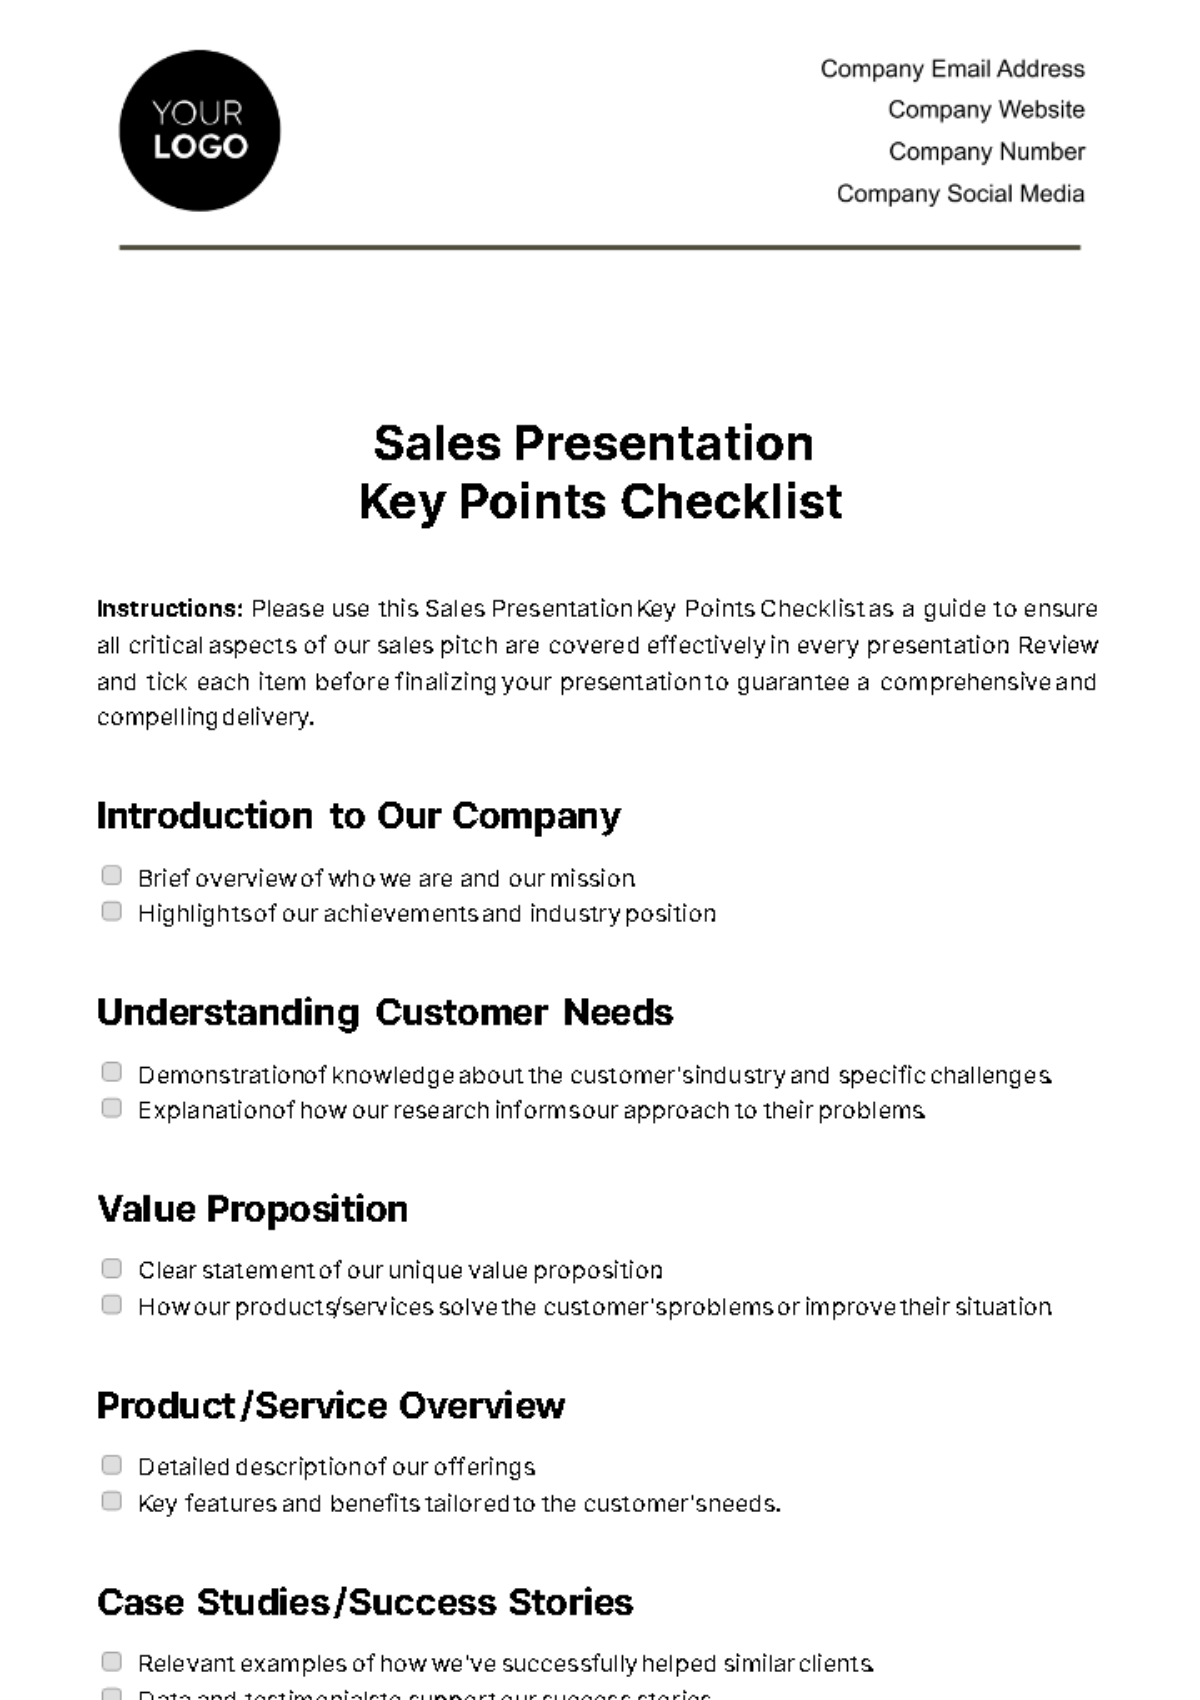 Free Sales Presentation Key Points Checklist Template